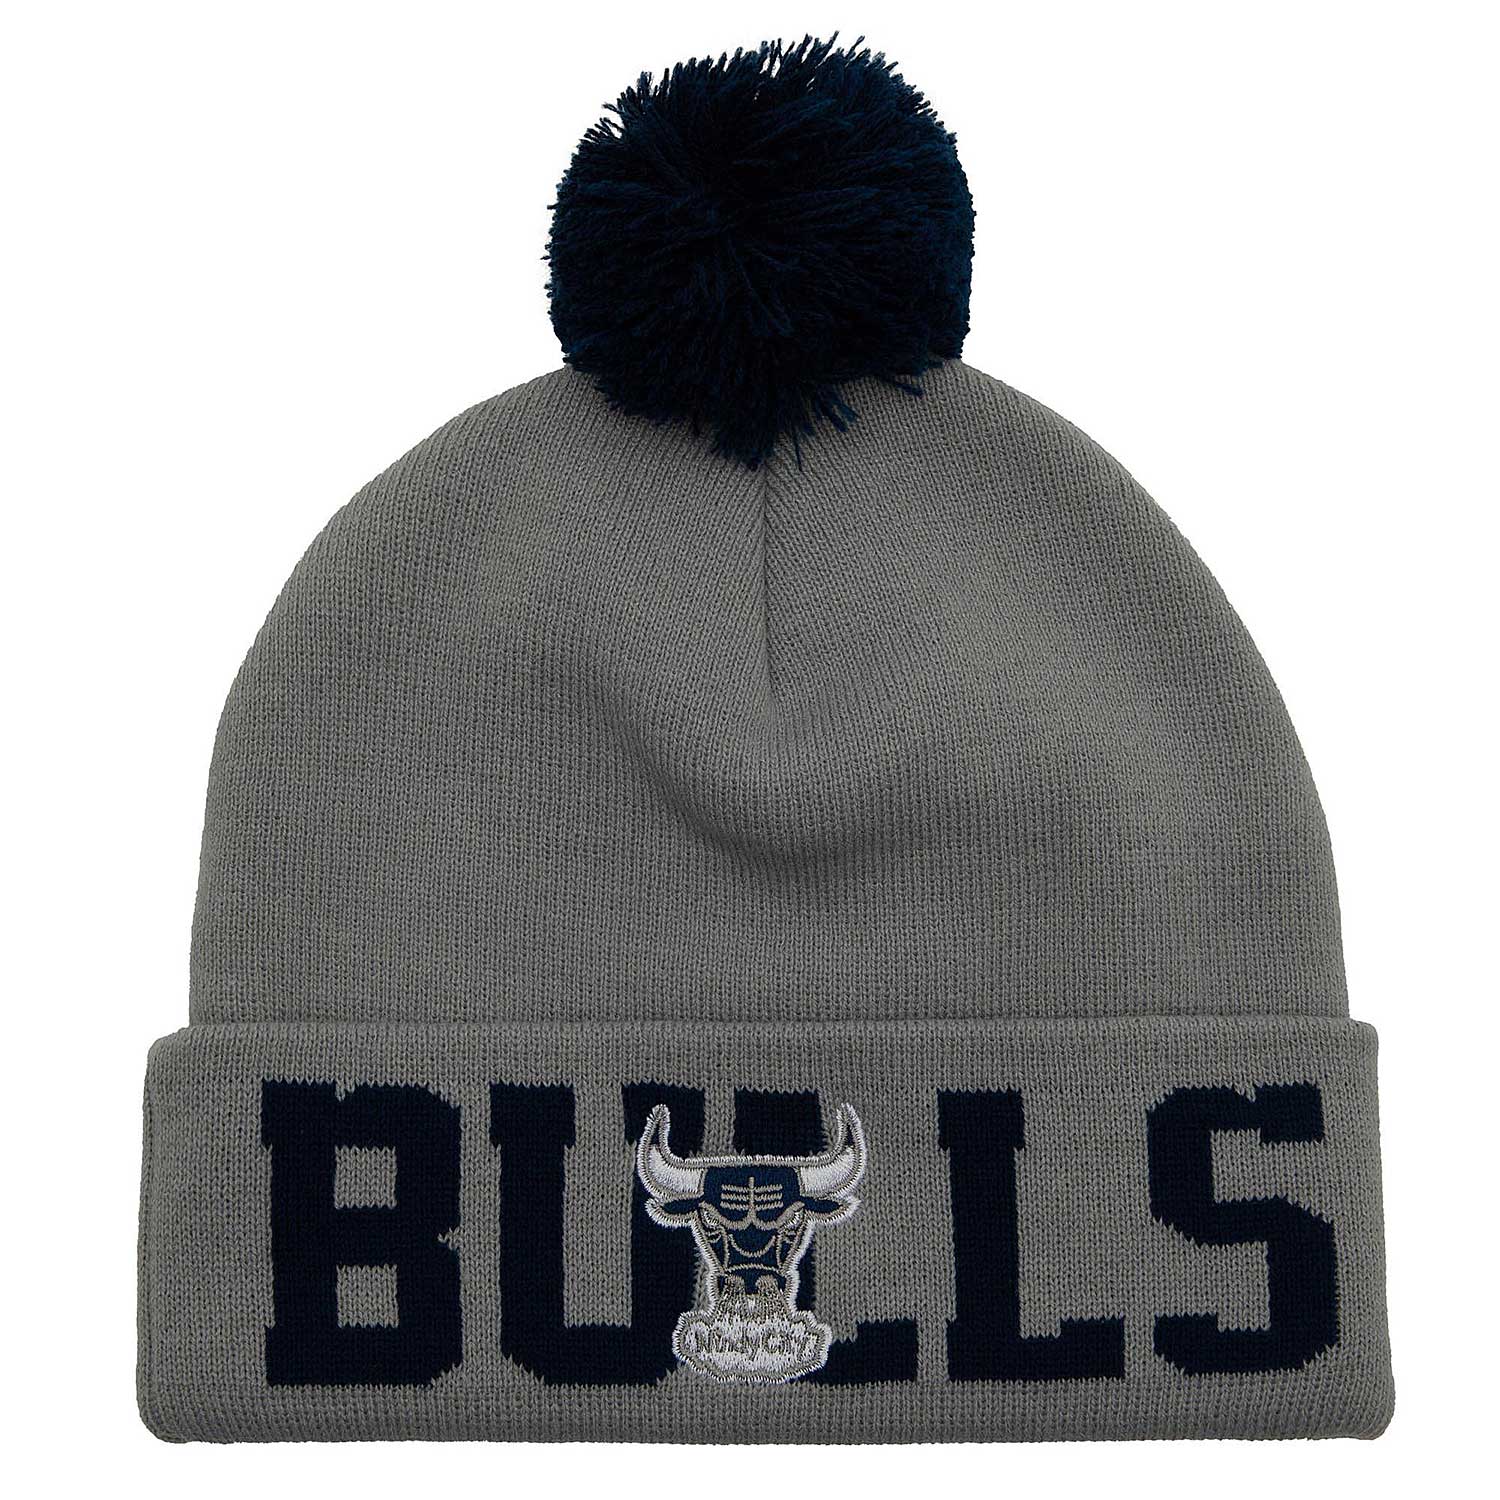 New Era Chicago Bulls beanie hat in black